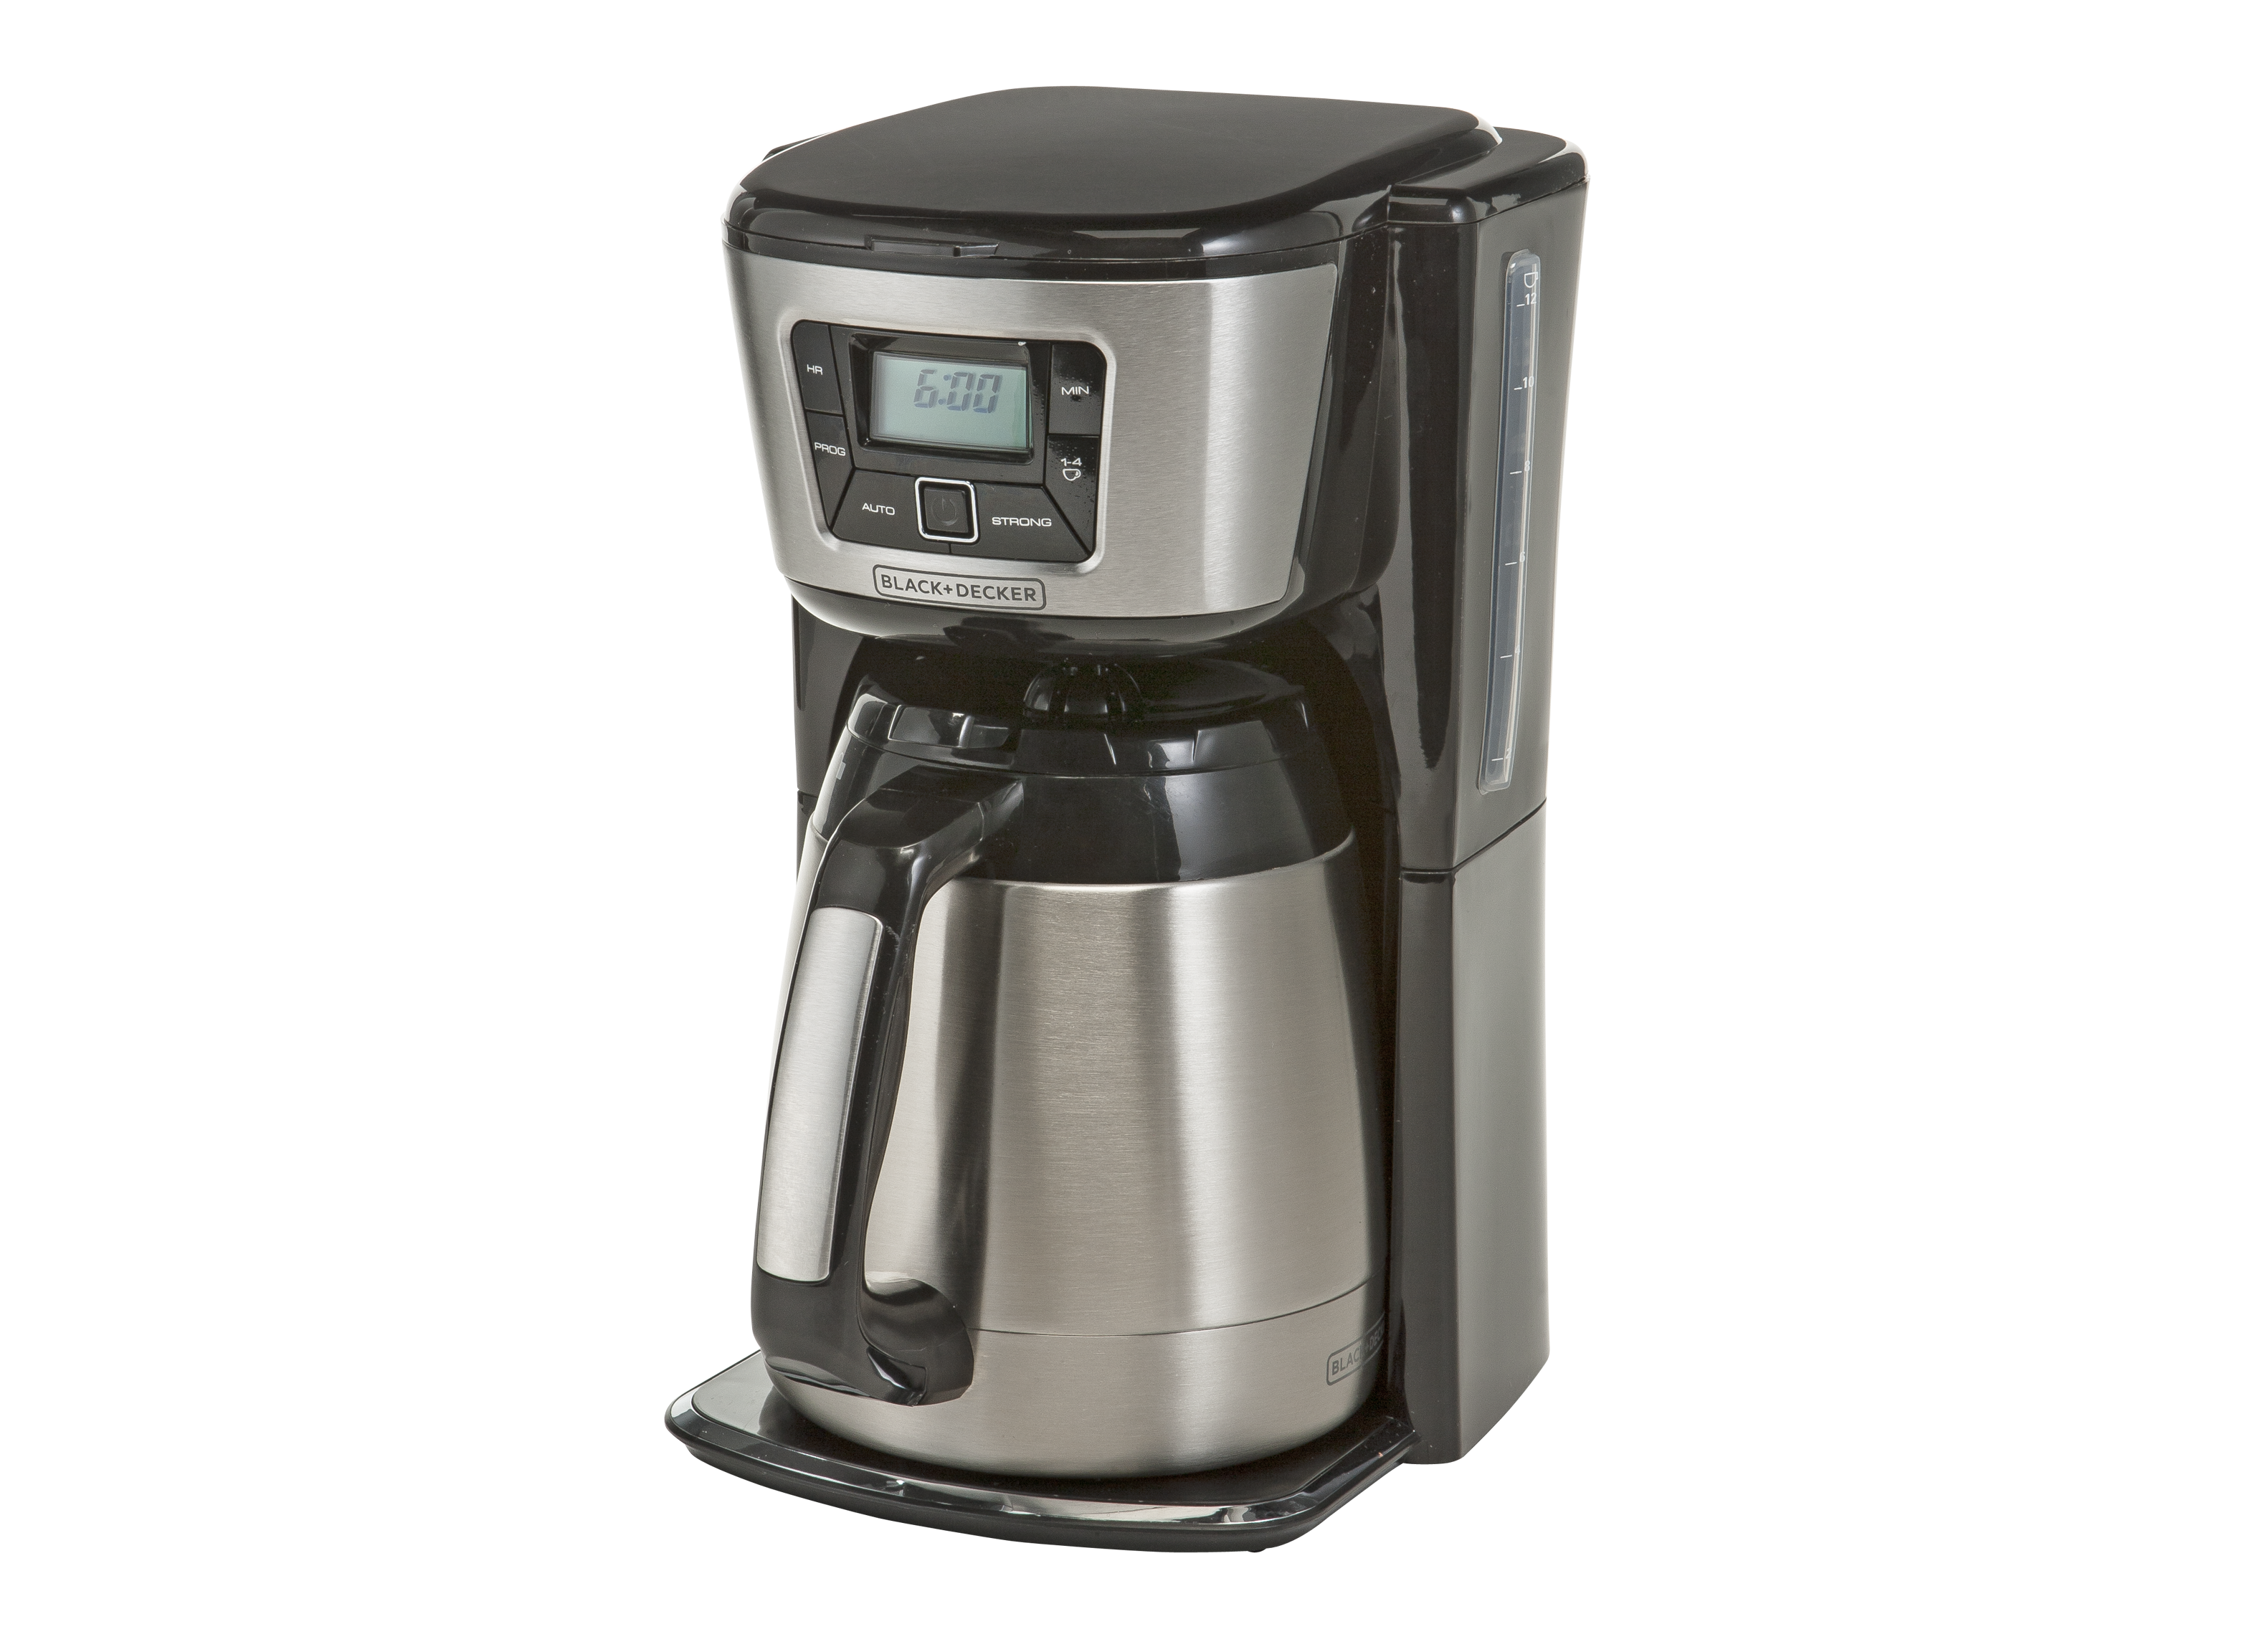 Black Decker CM2035B 12-Cup Thermal Coffee Maker